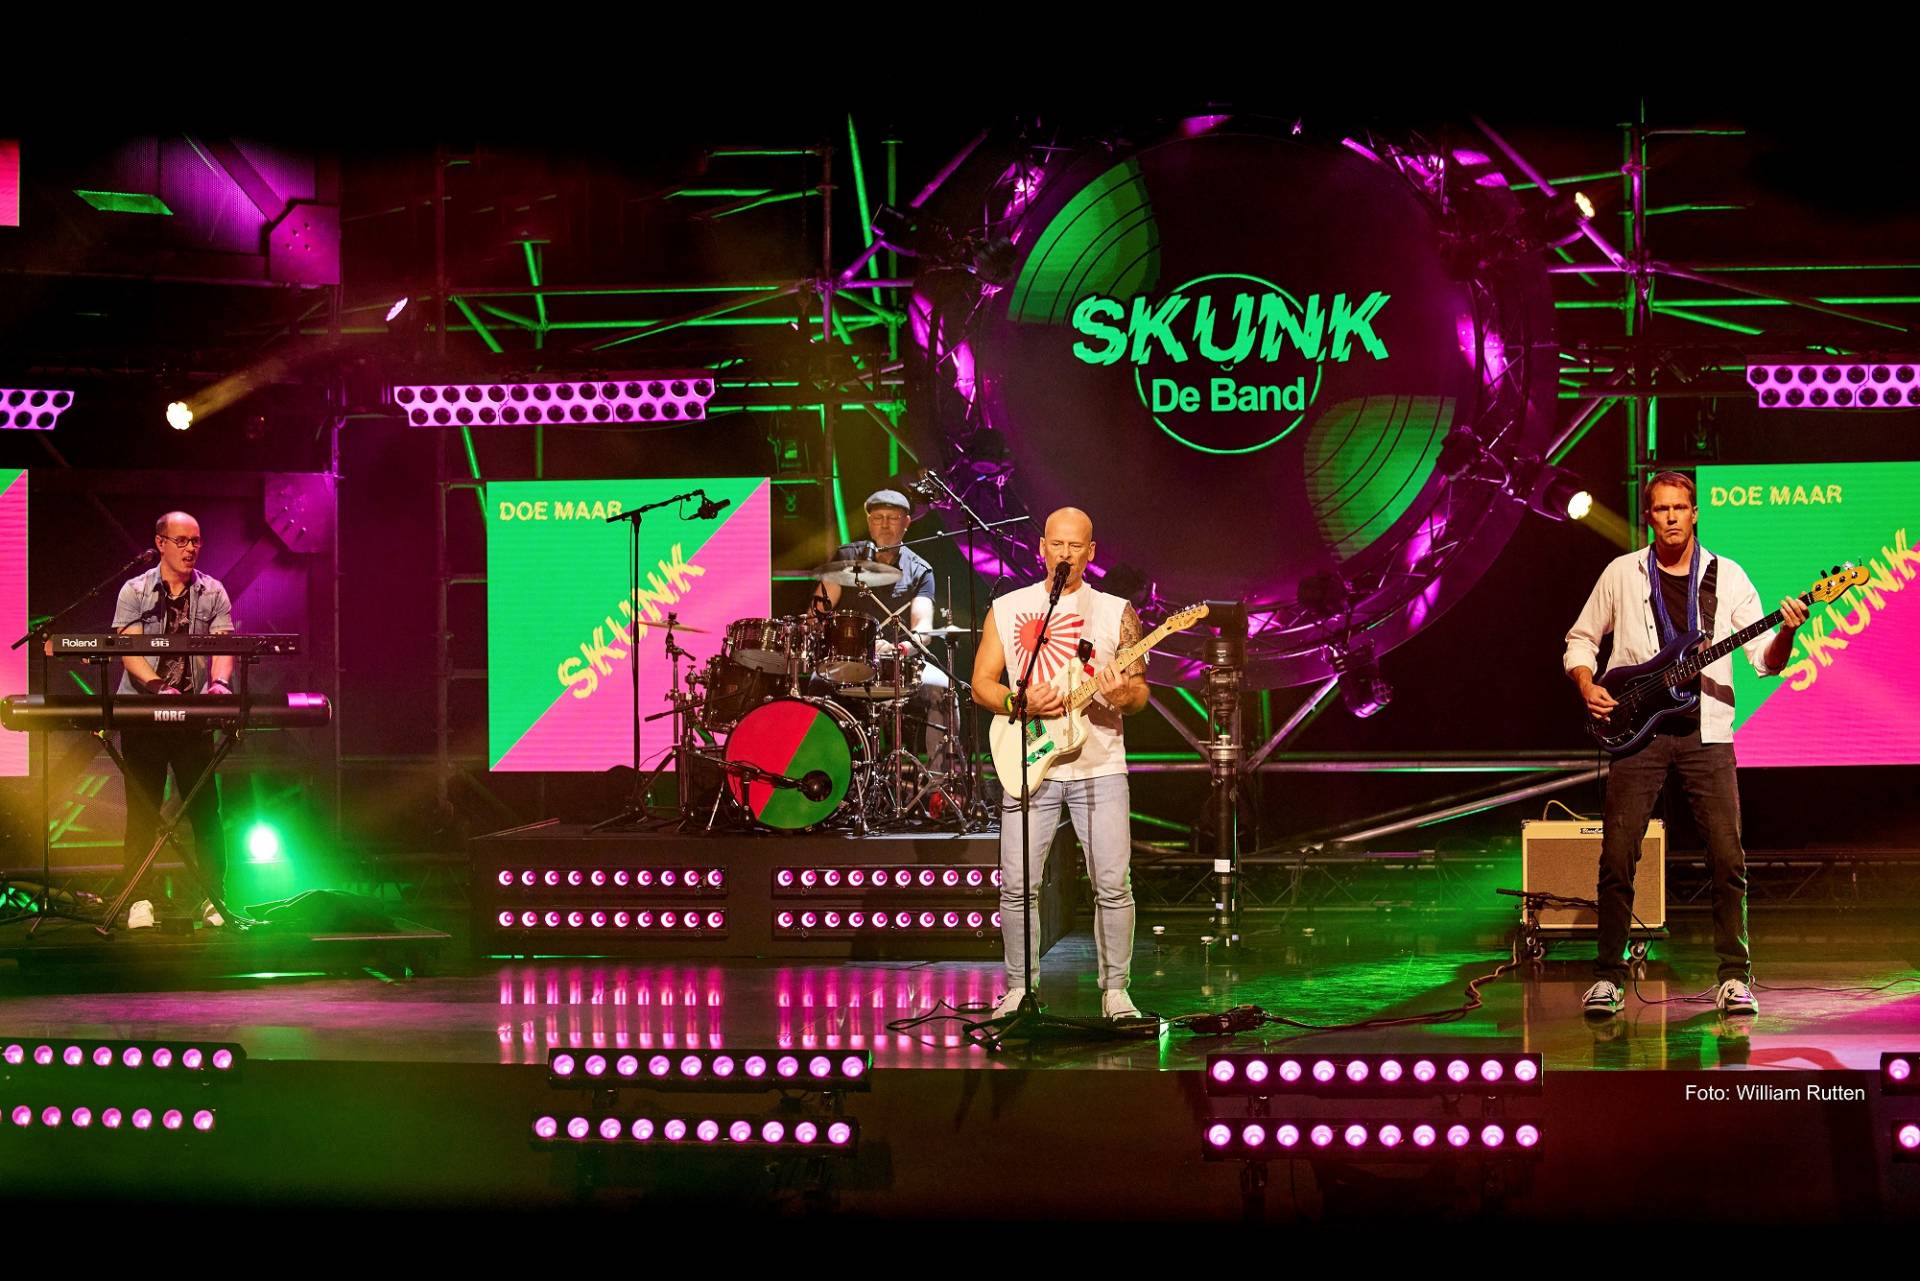 Skunk Doe Maar Tributeband Coverband Credits Foto-William Rutten